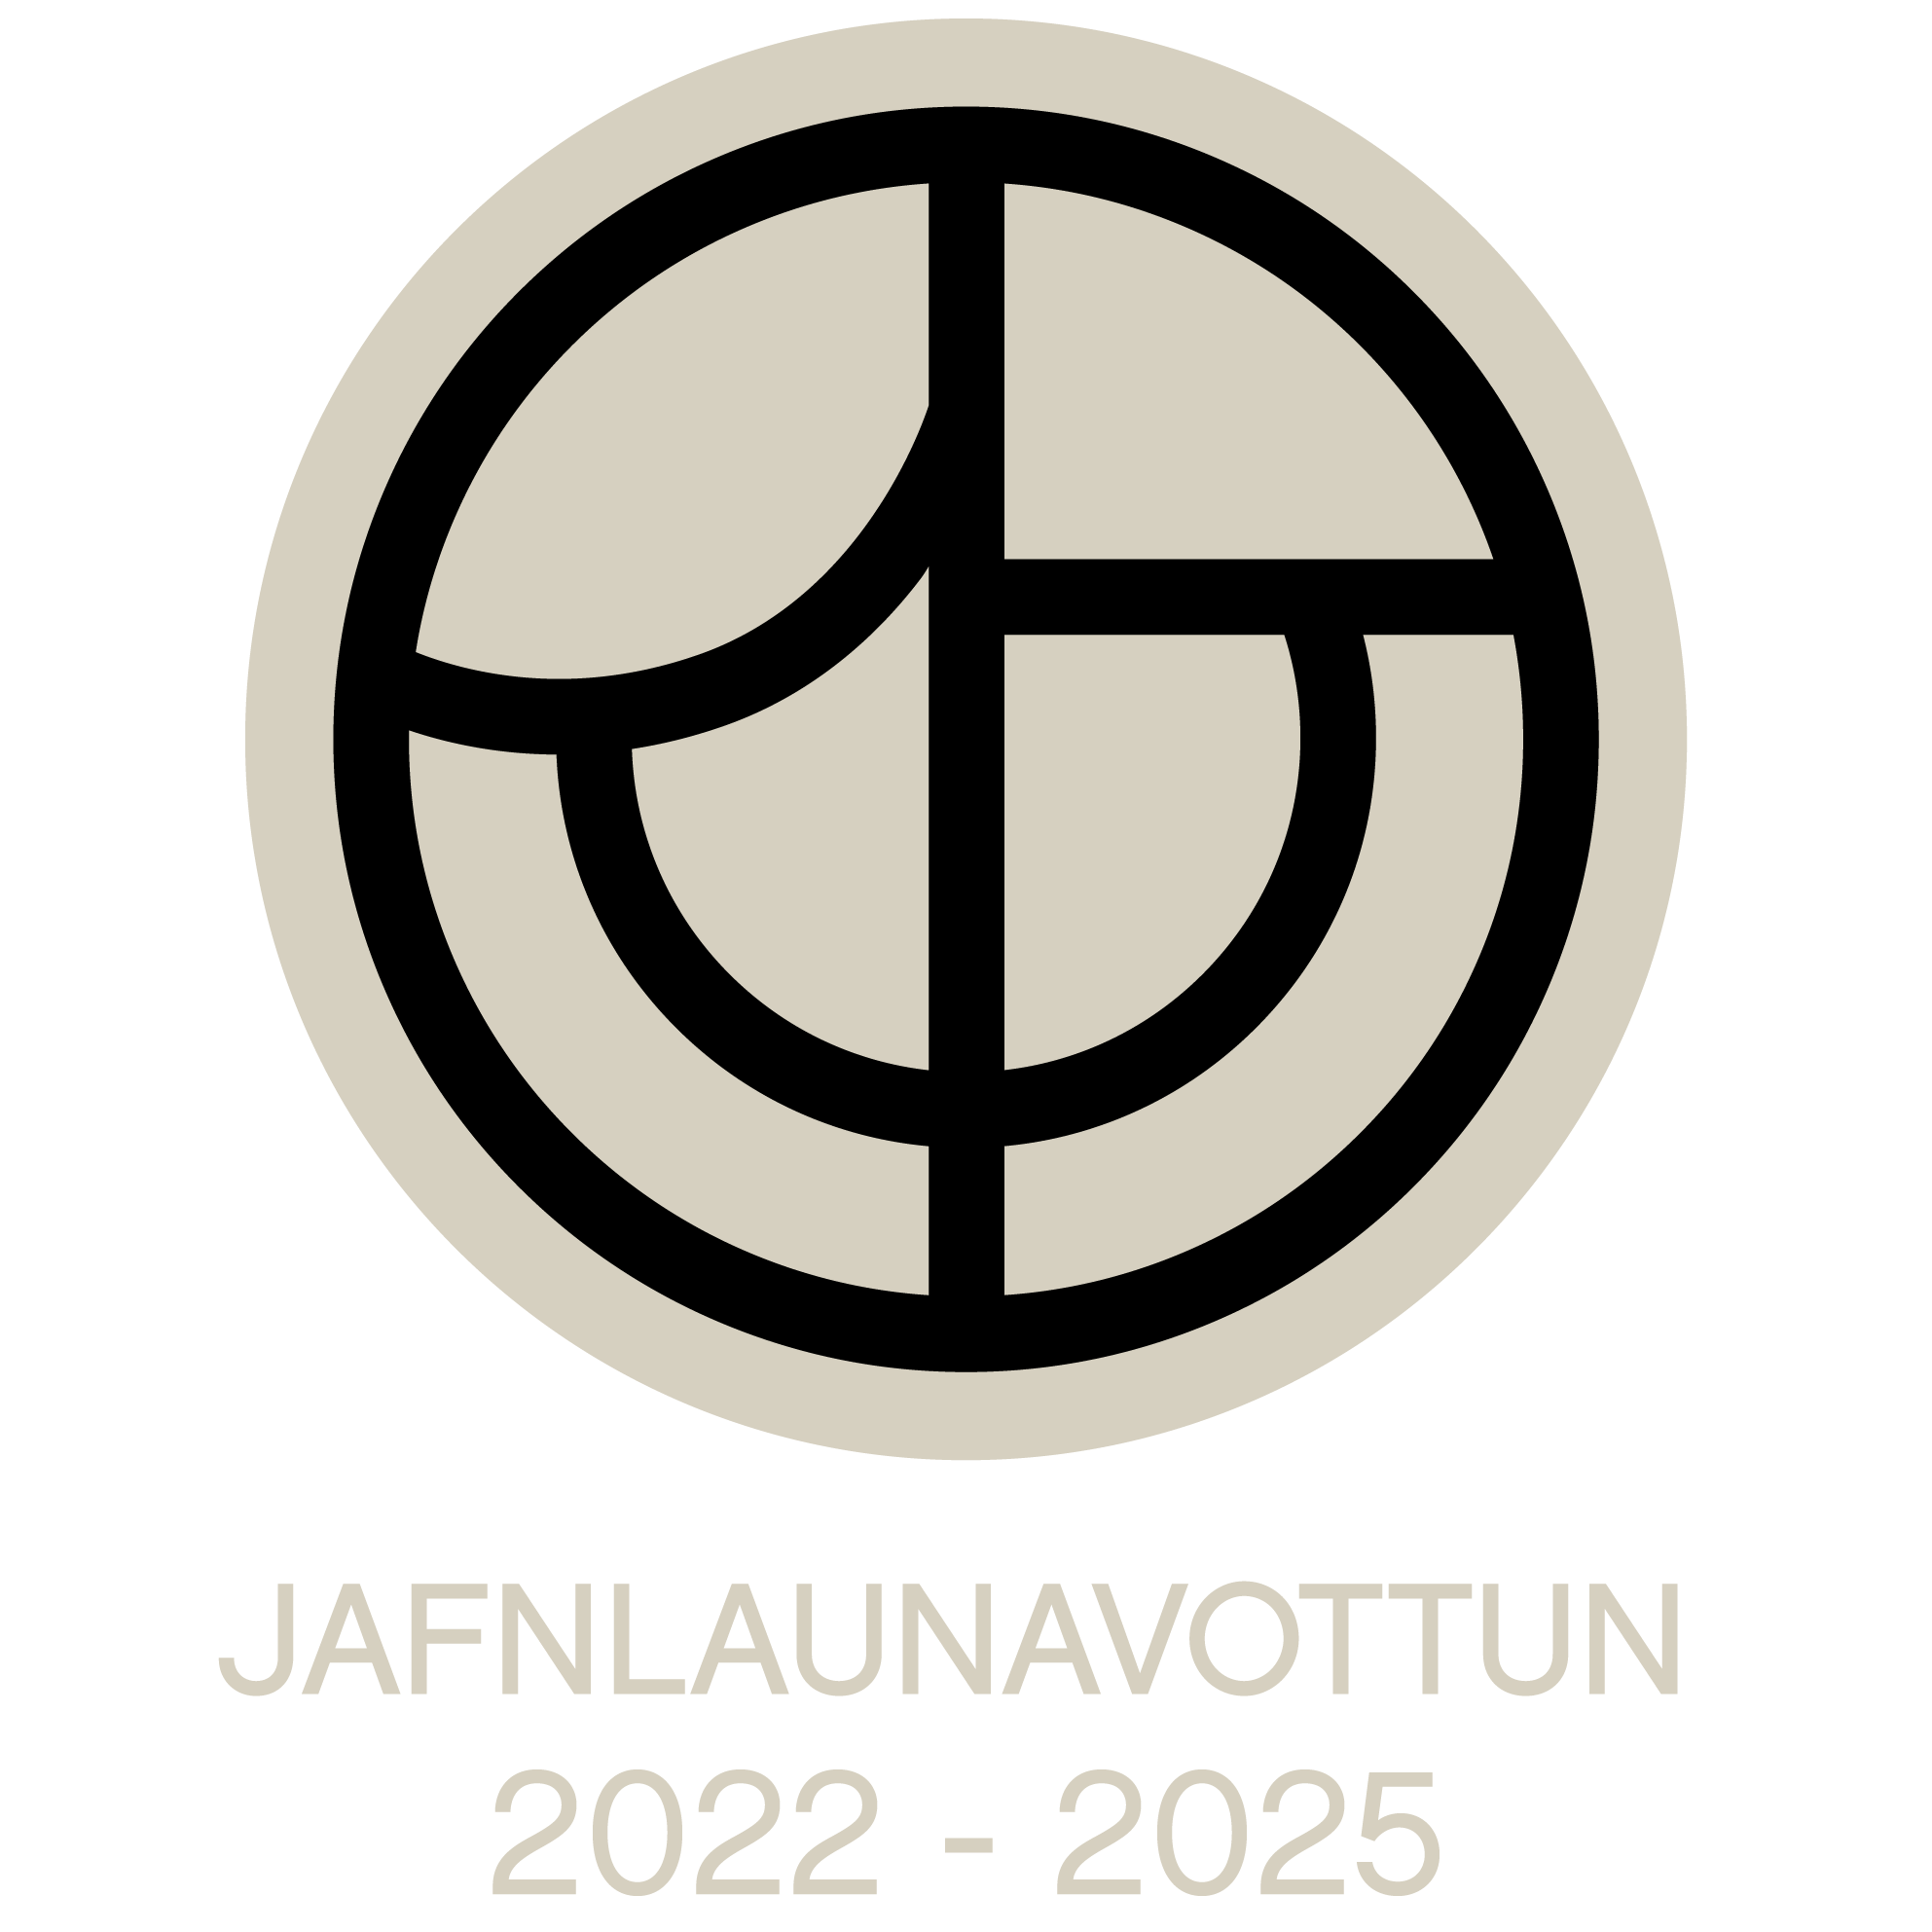 Jafnlaunavottun 2022-2025